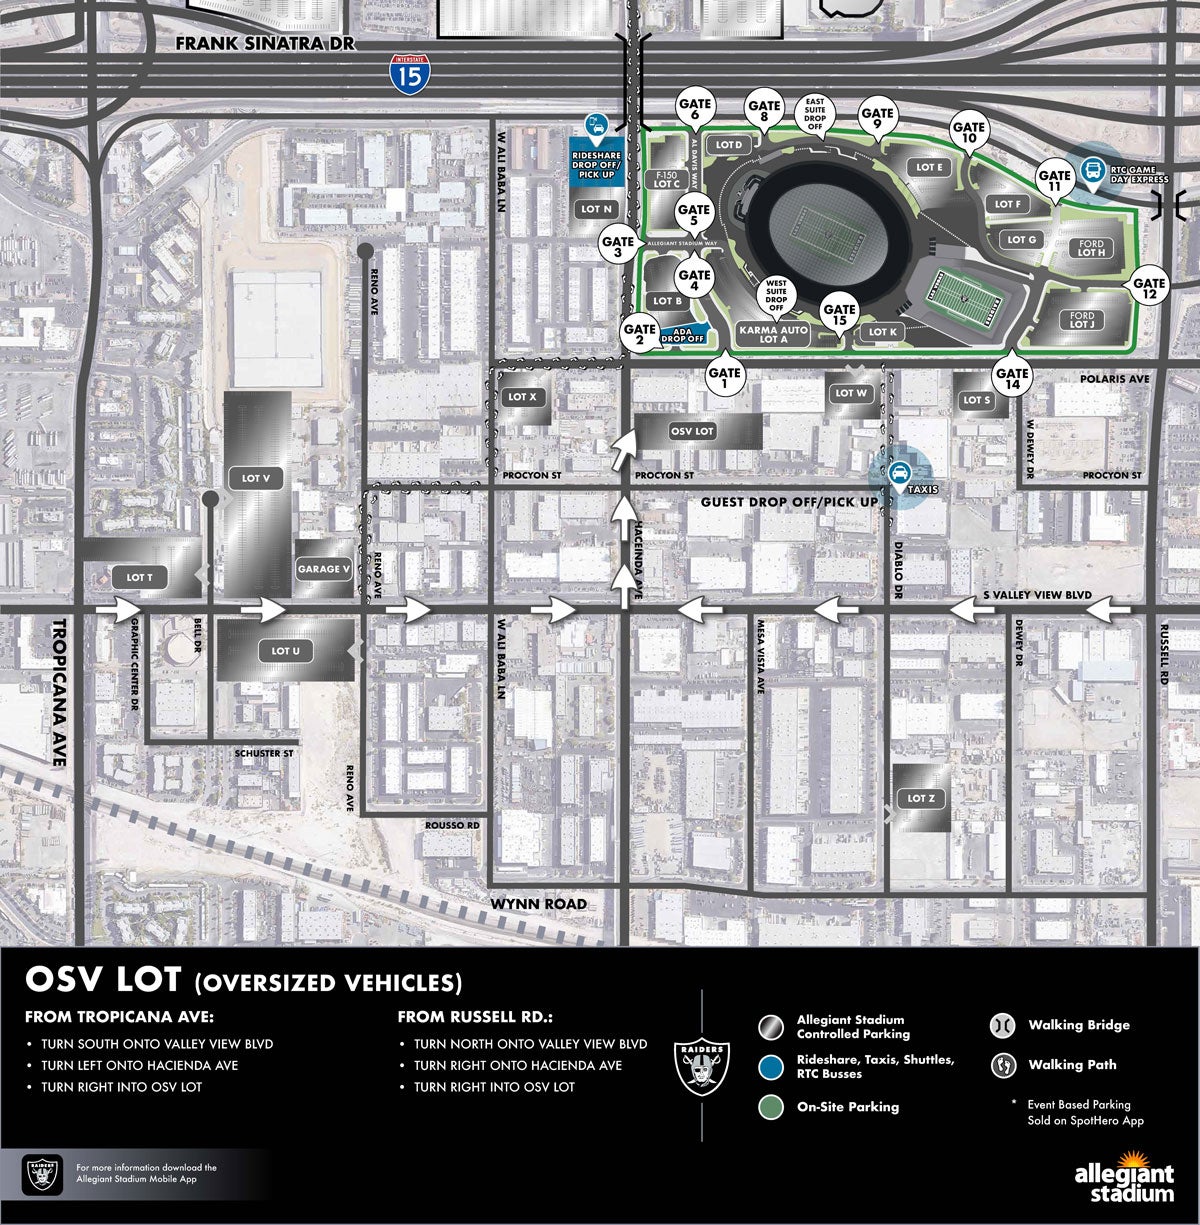 OSV (Oversized Vehicles) Lot Parking Map